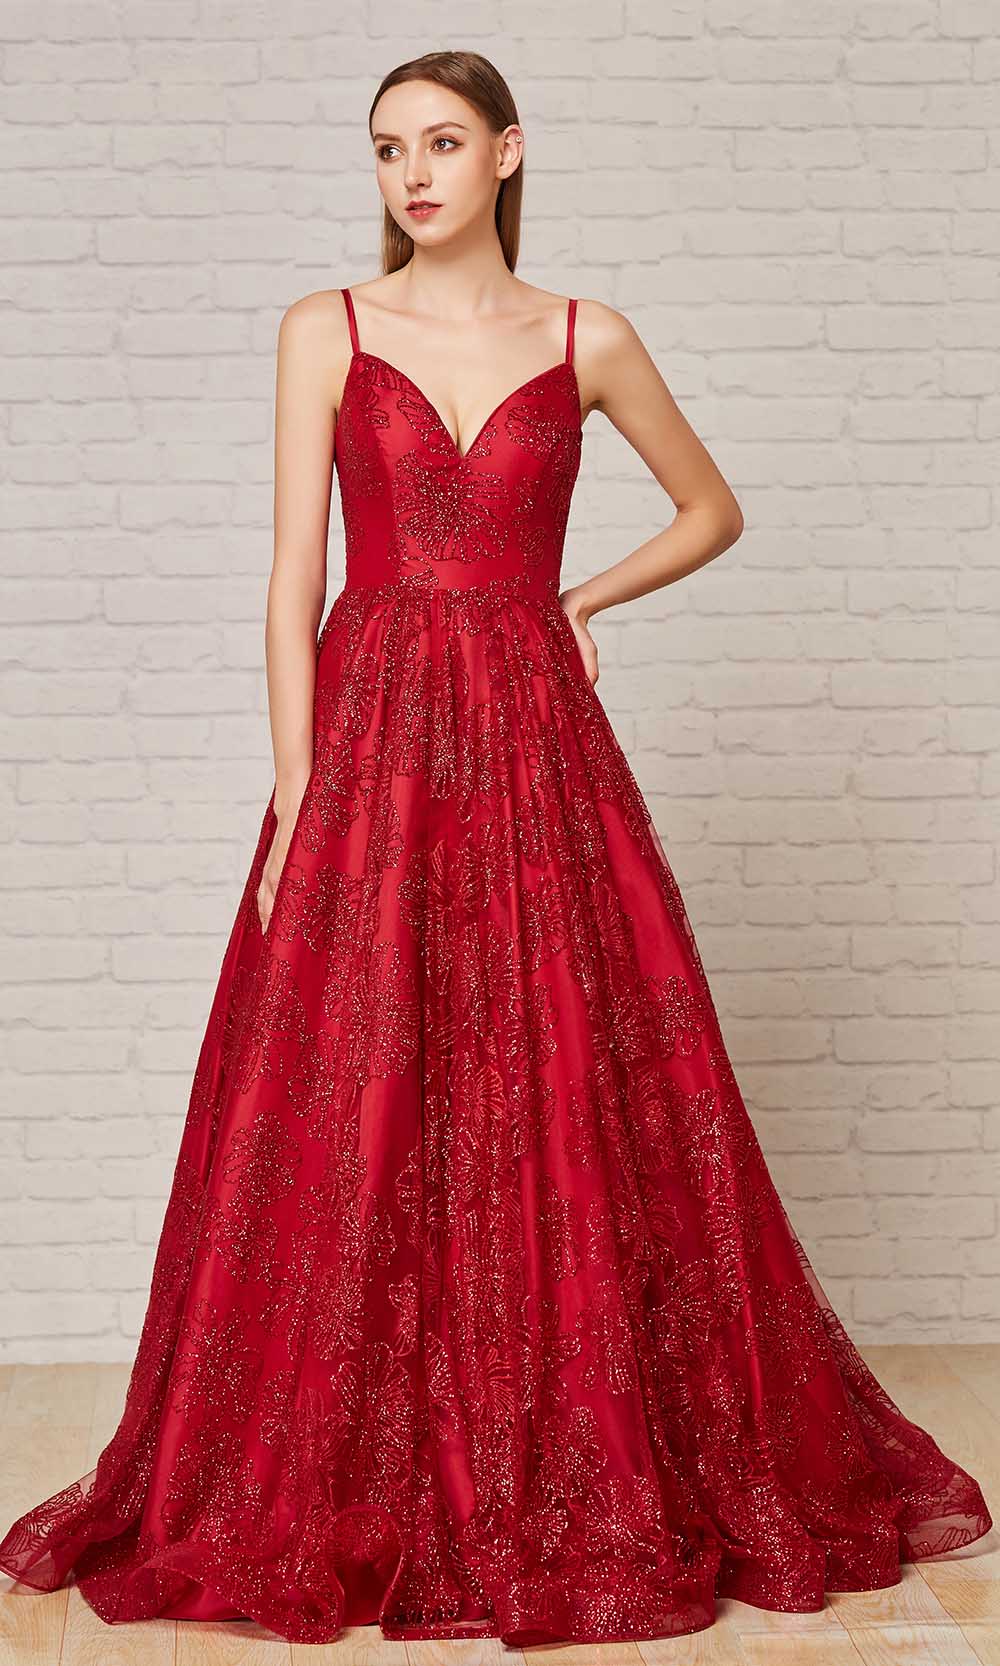 J'Adore Dresses - J18022 Floral Glitter Print A-Line Gown
